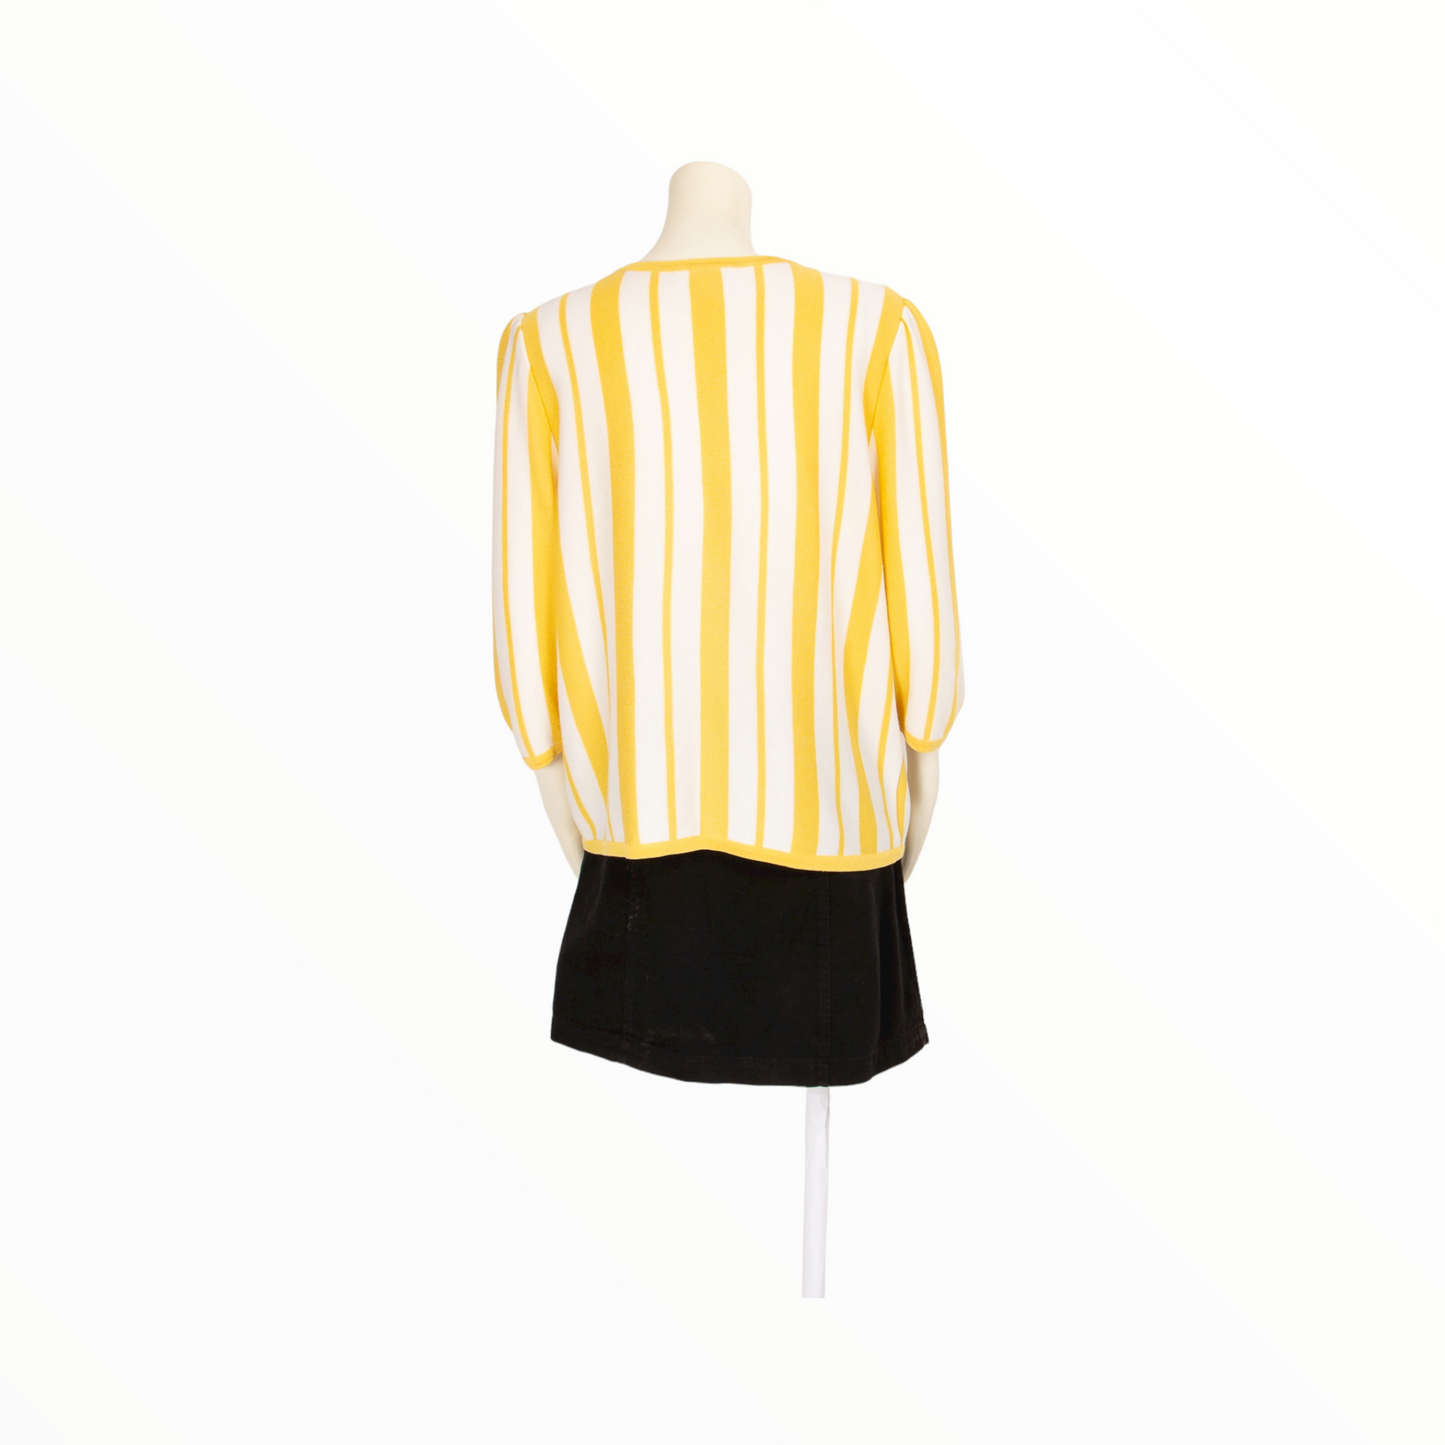 Nina Ricci vintage white and yellow striped cardigan - L - 1990s